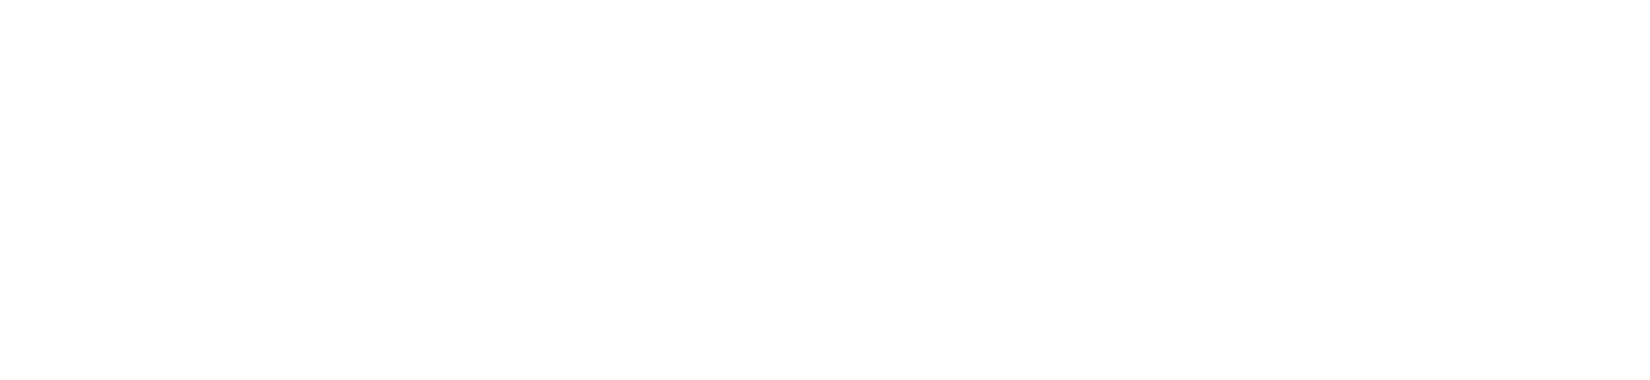 oldice max logo